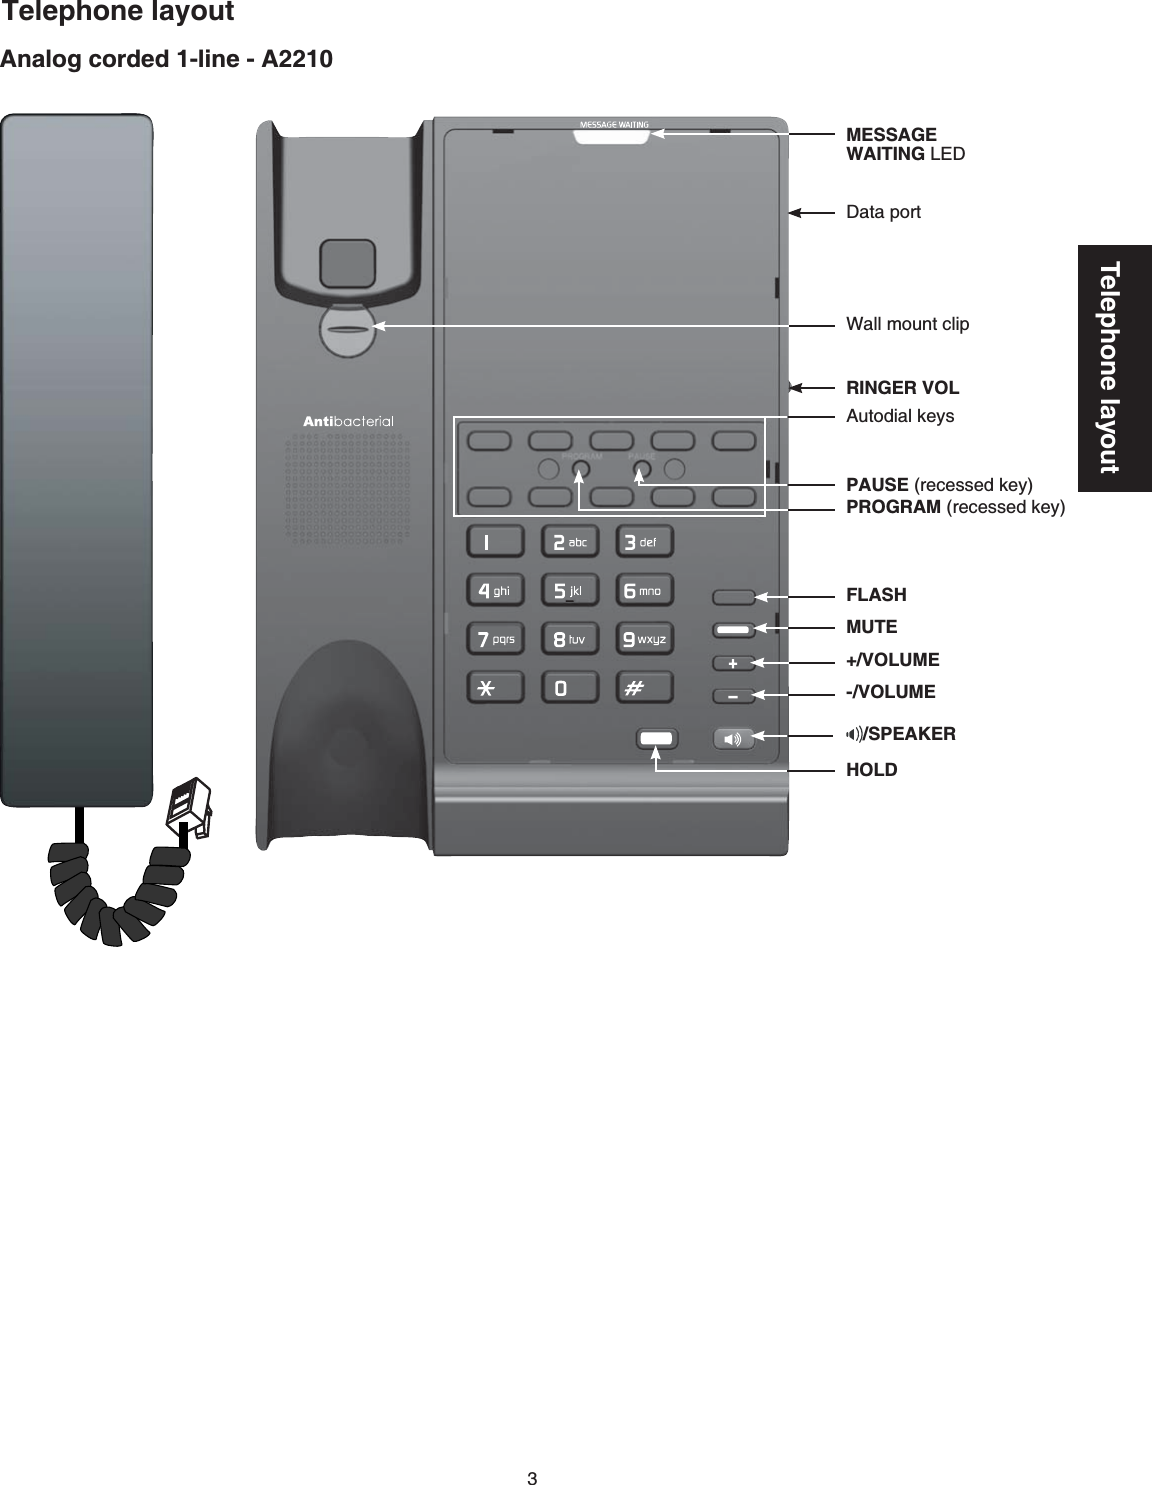 3Telephone layoutTelephone layoutAnalog corded 1-line - A2210-/VOLUMEMUTEFLASHAutodial keys&amp;CVCRQTVMESSAGEWAITING.&apos;&amp;Wall mount clipRINGER VOLHOLD/SPEAKERPROGRAM (recessed key)PAUSE (recessed key)+/VOLUME